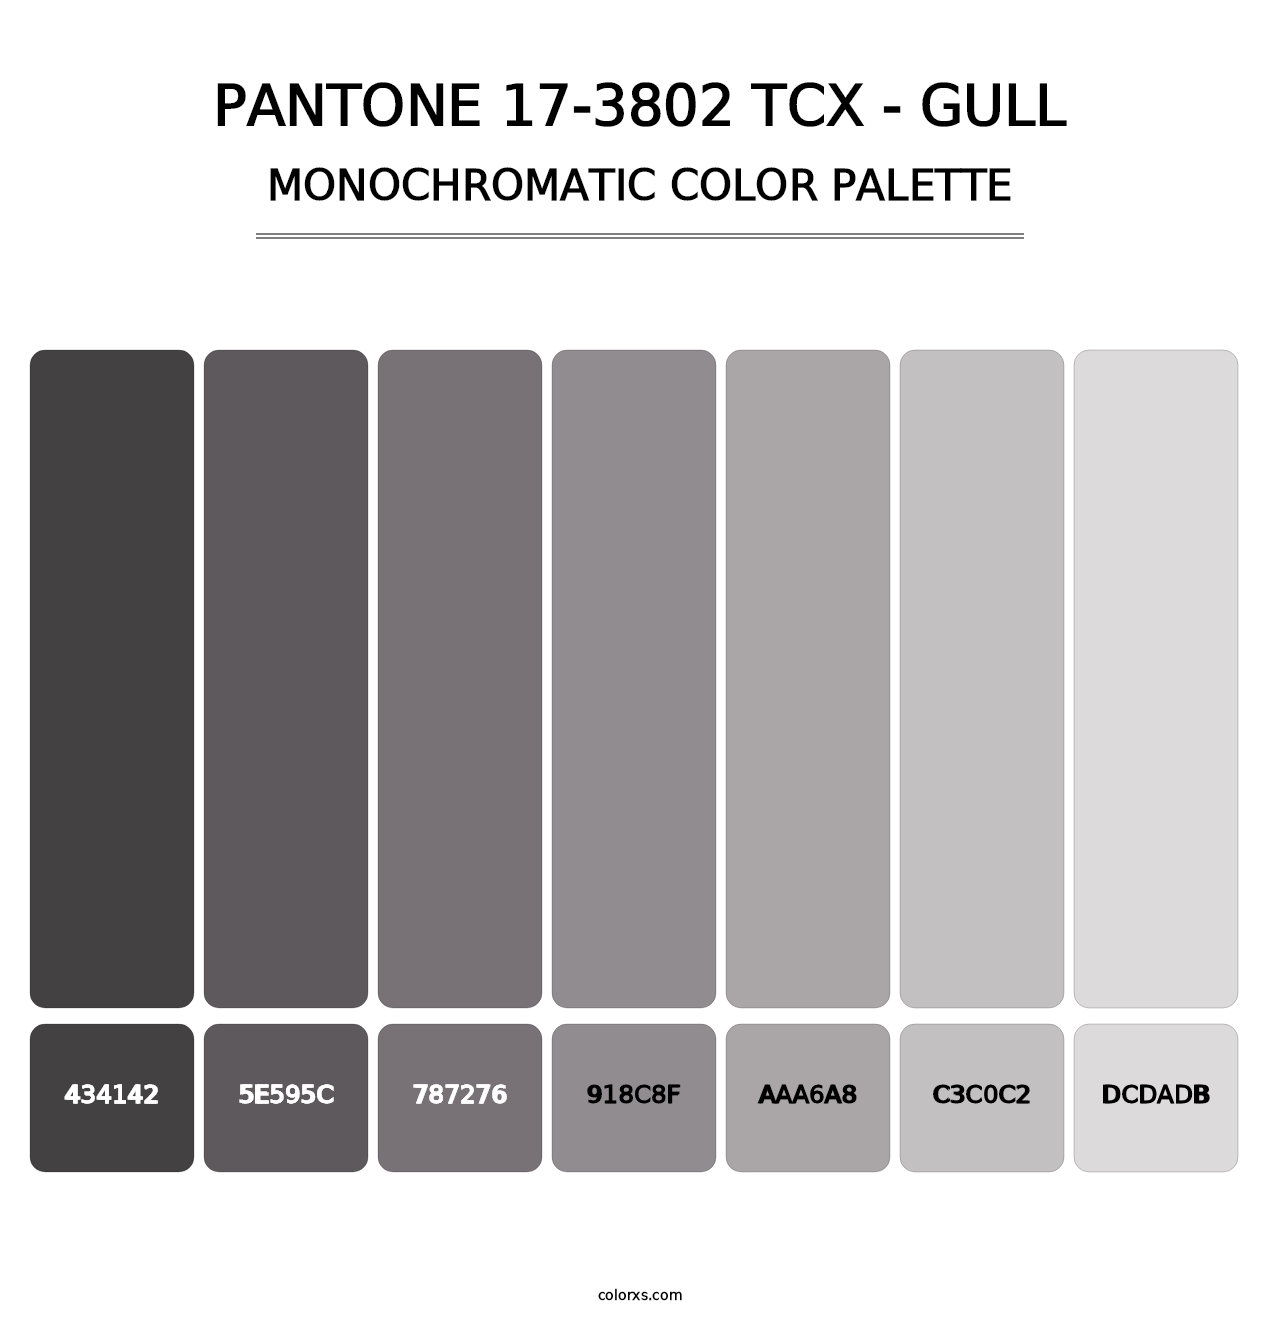 PANTONE 17-3802 TCX - Gull - Monochromatic Color Palette